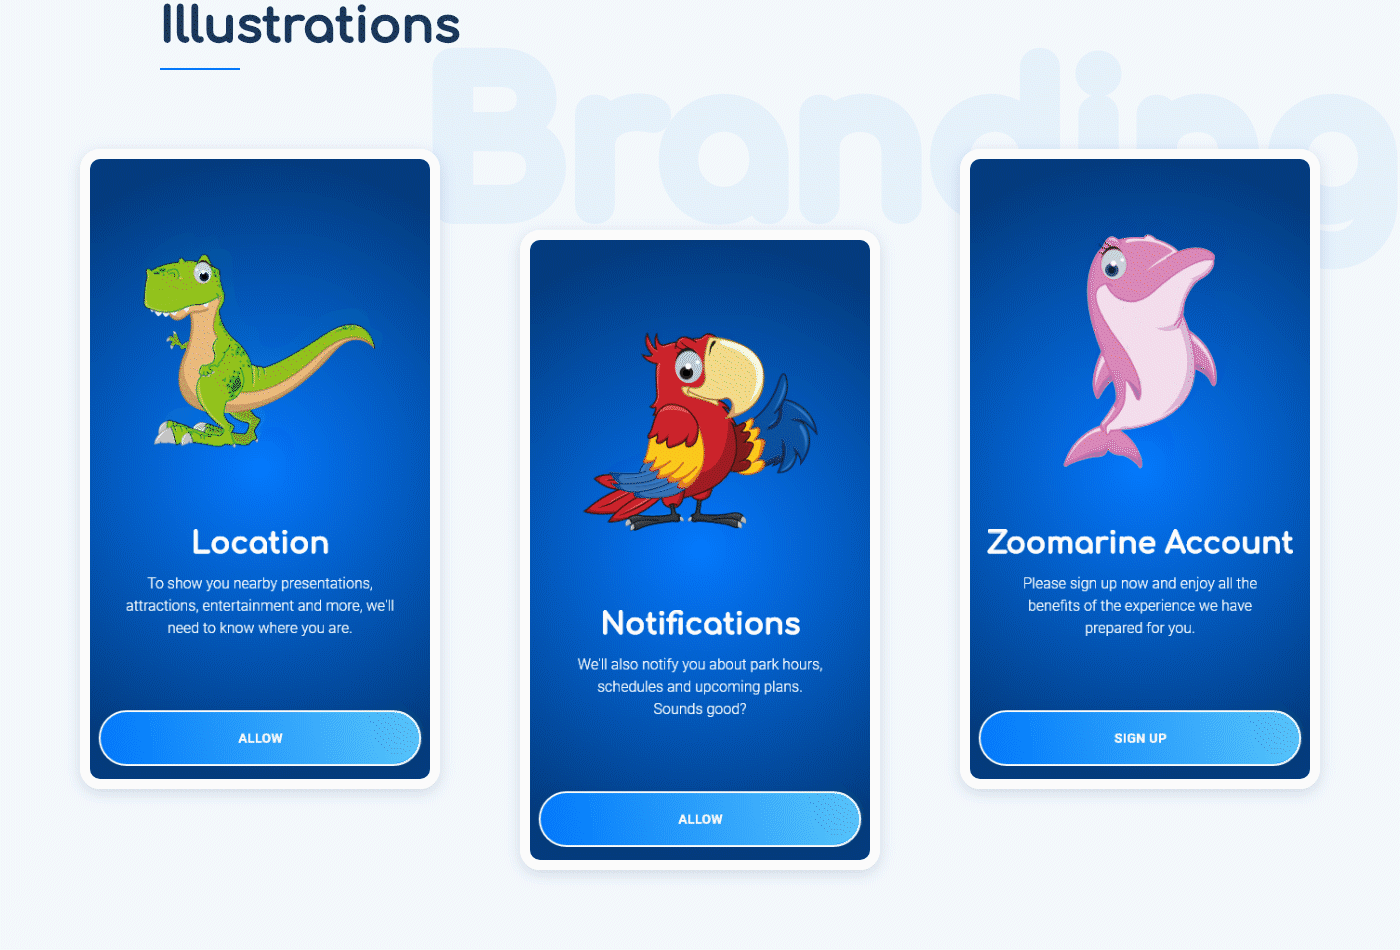 Zoiomarine Mobile App - Illustrations